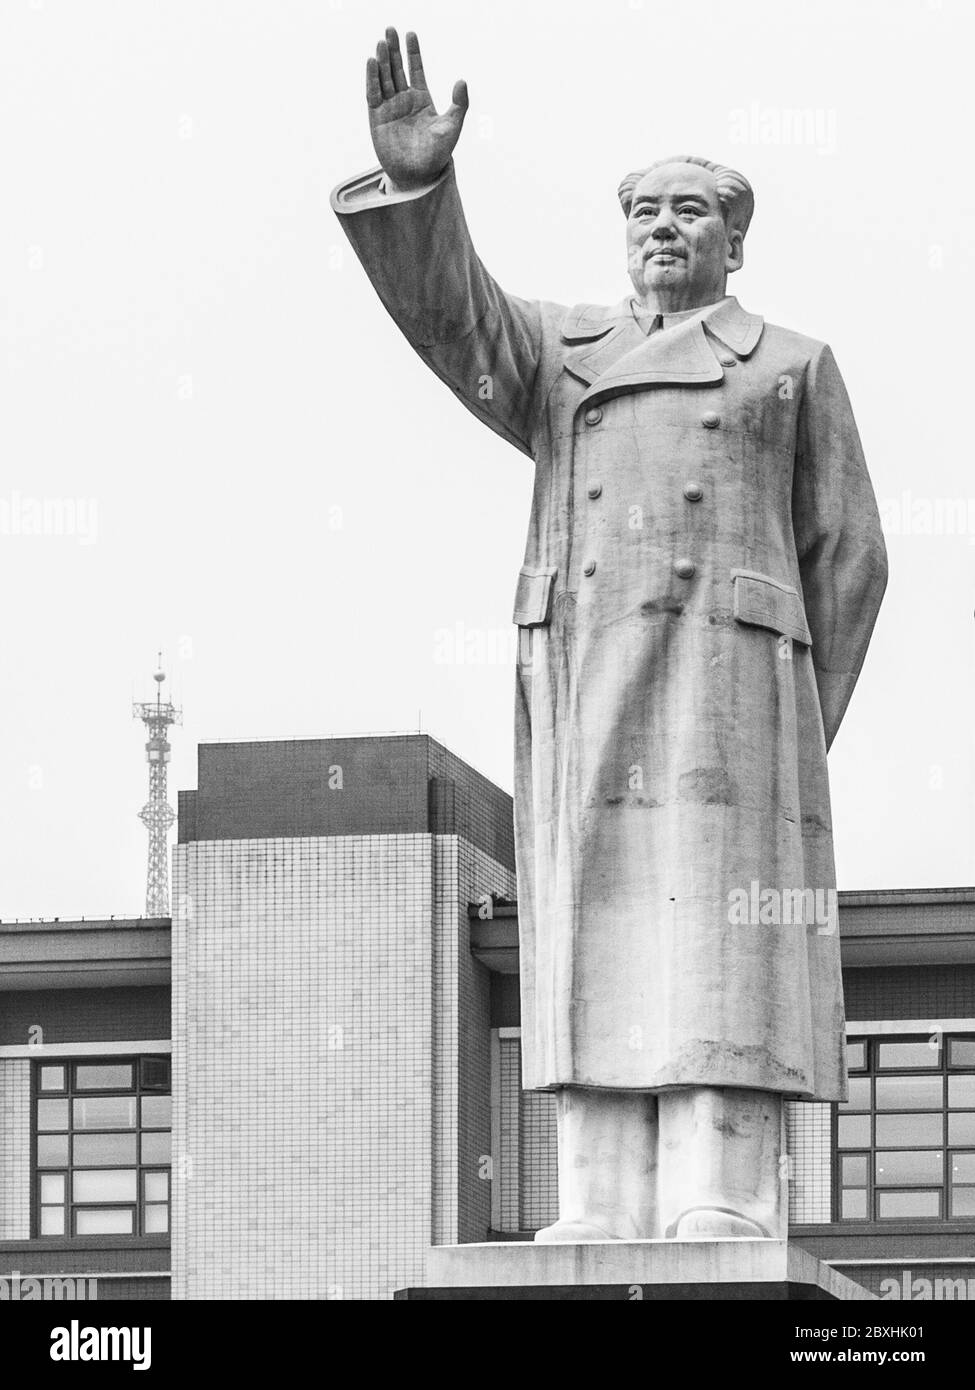 CHENGDU, CHINA - AUGUST 27, 2012: Statue of Chairman Mao Zedong on Tianfu Square, Chengdu, Sichuan Province, China Stock Photo